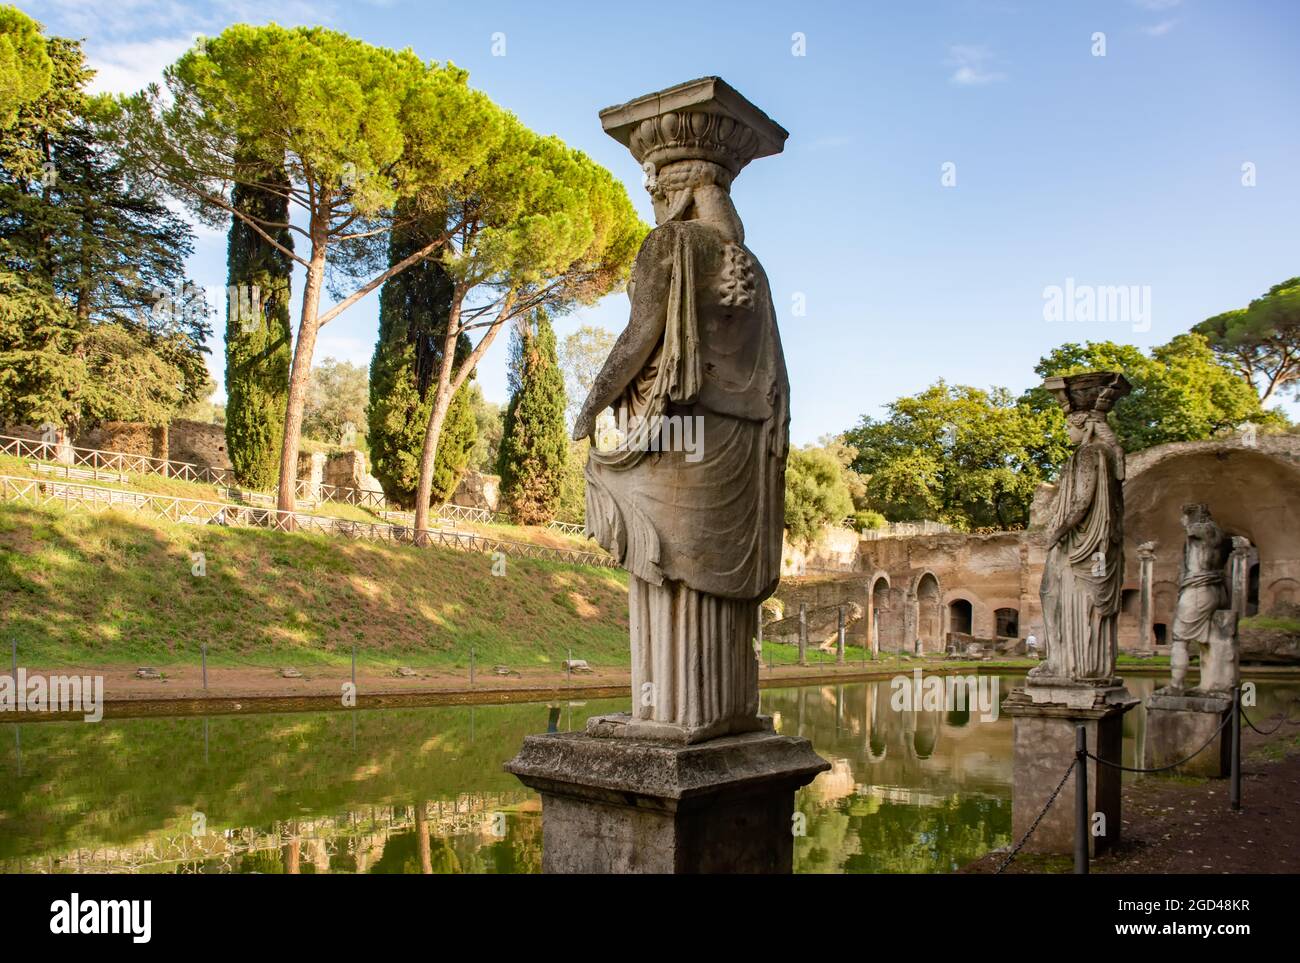 Complexe archéologique romain Villa Adriana à Tivoli, Italie Banque D'Images